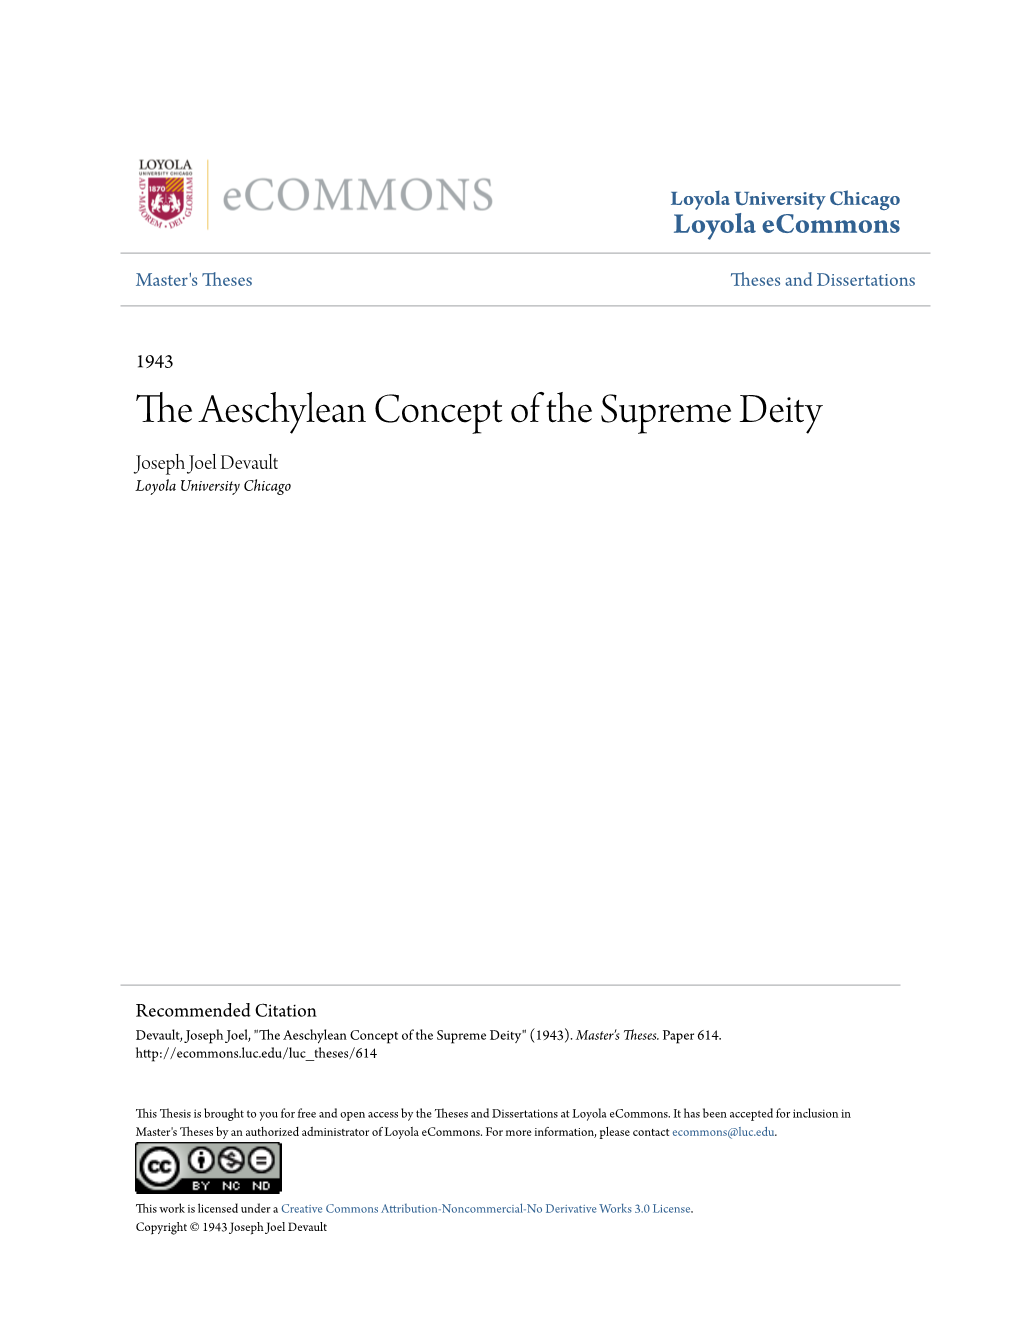 The Aeschylean Concept of the Supreme Deity Joseph Joel Devault Loyola University Chicago